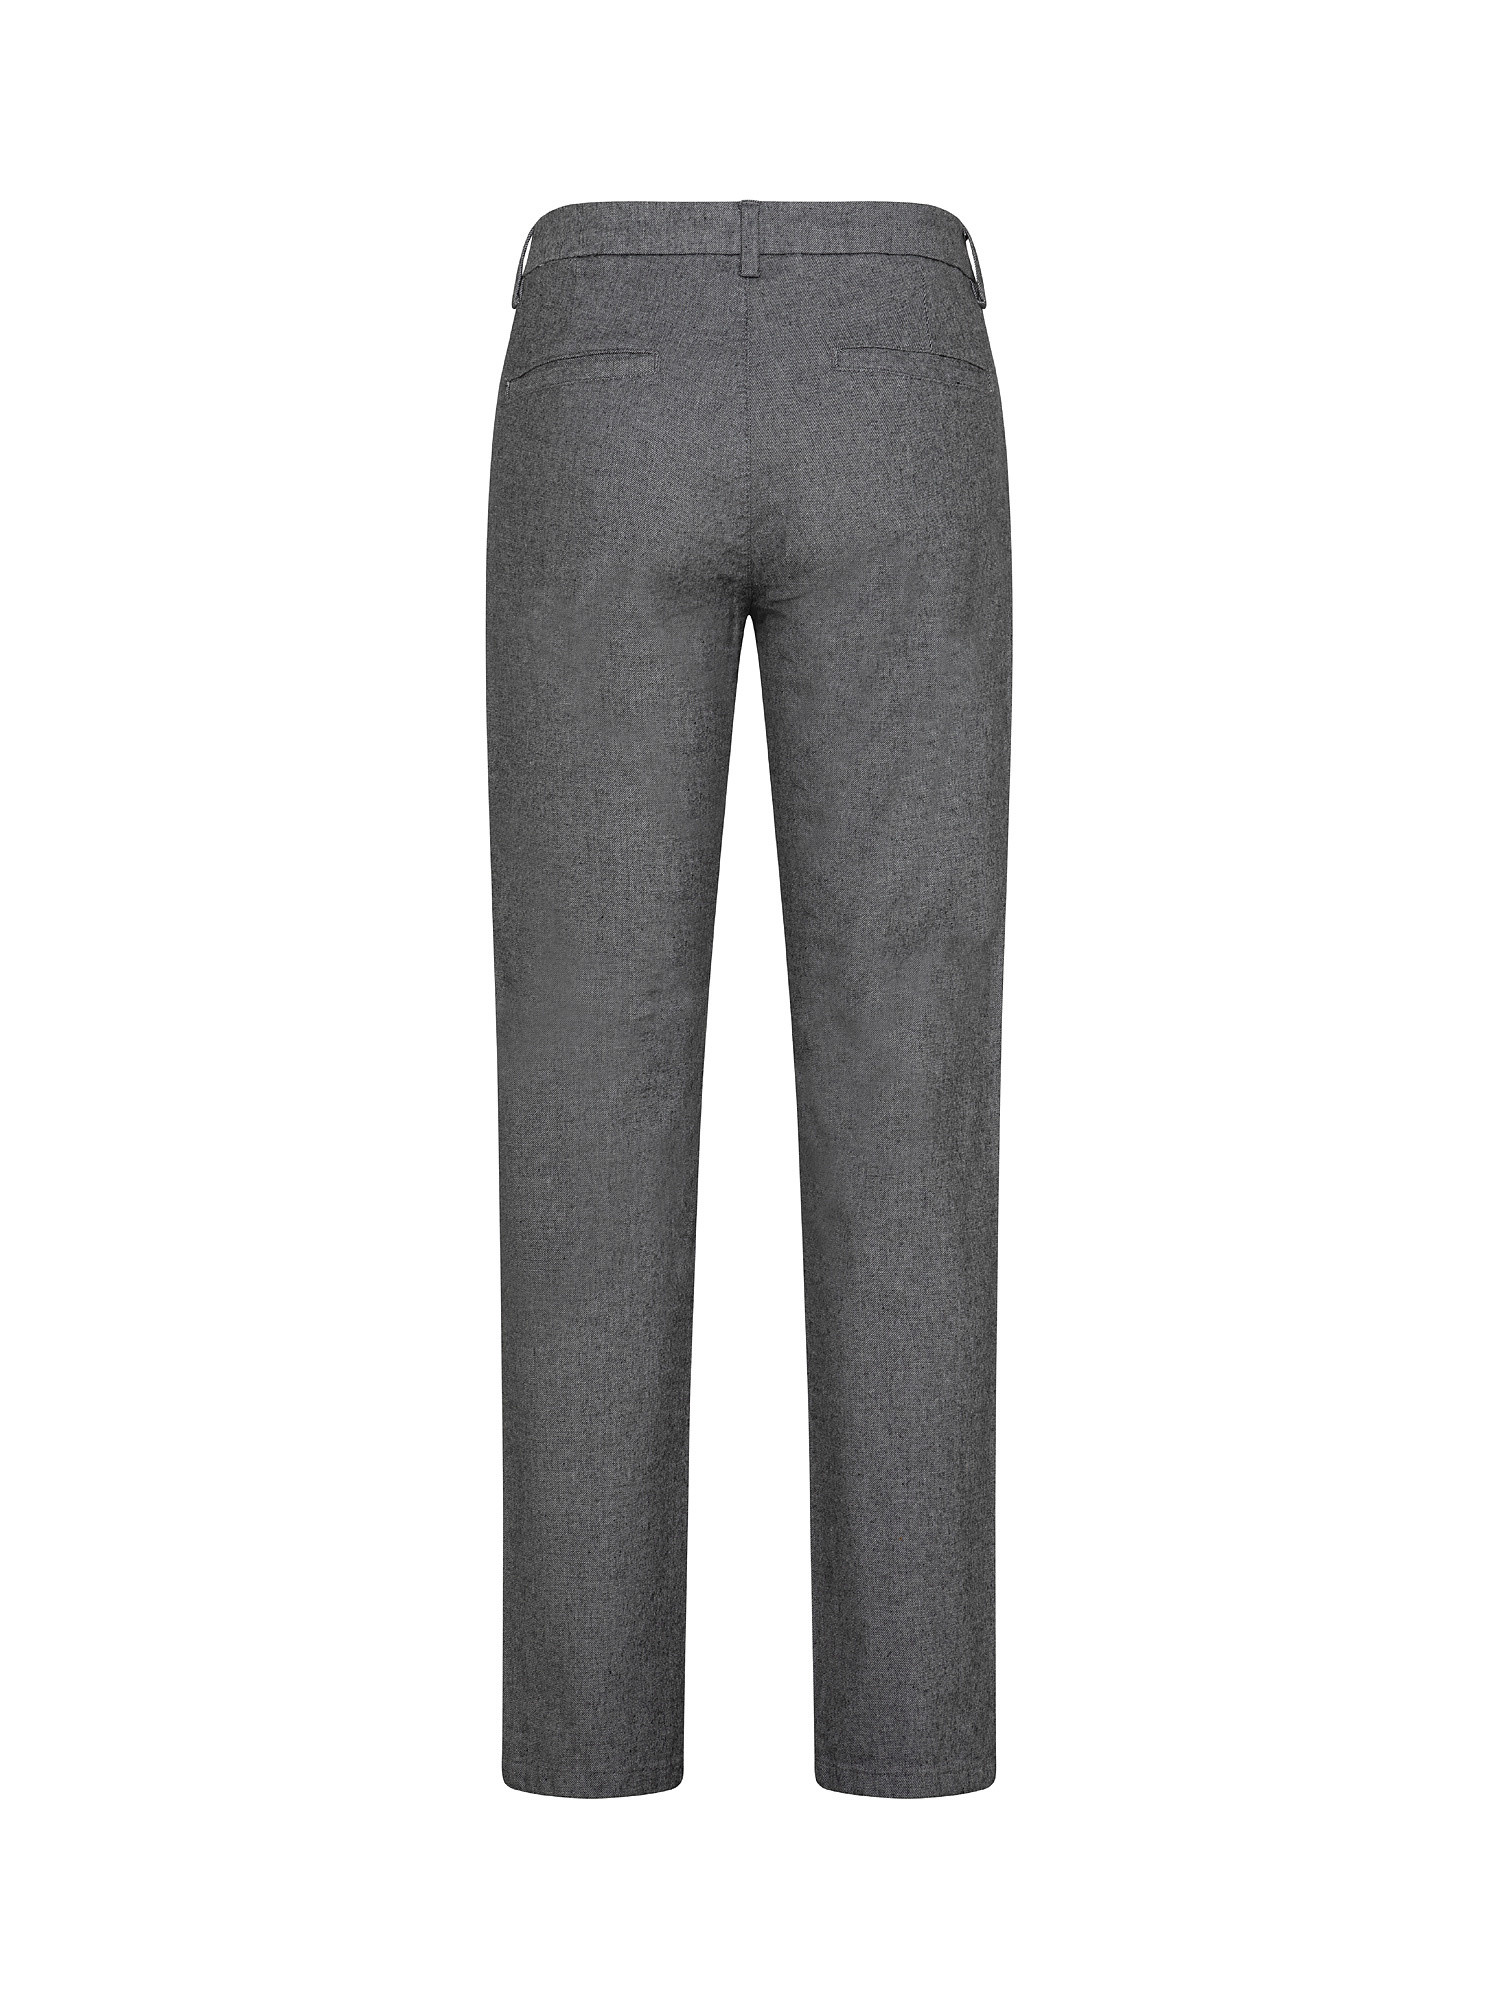 Chino pants, Grey, large image number 1